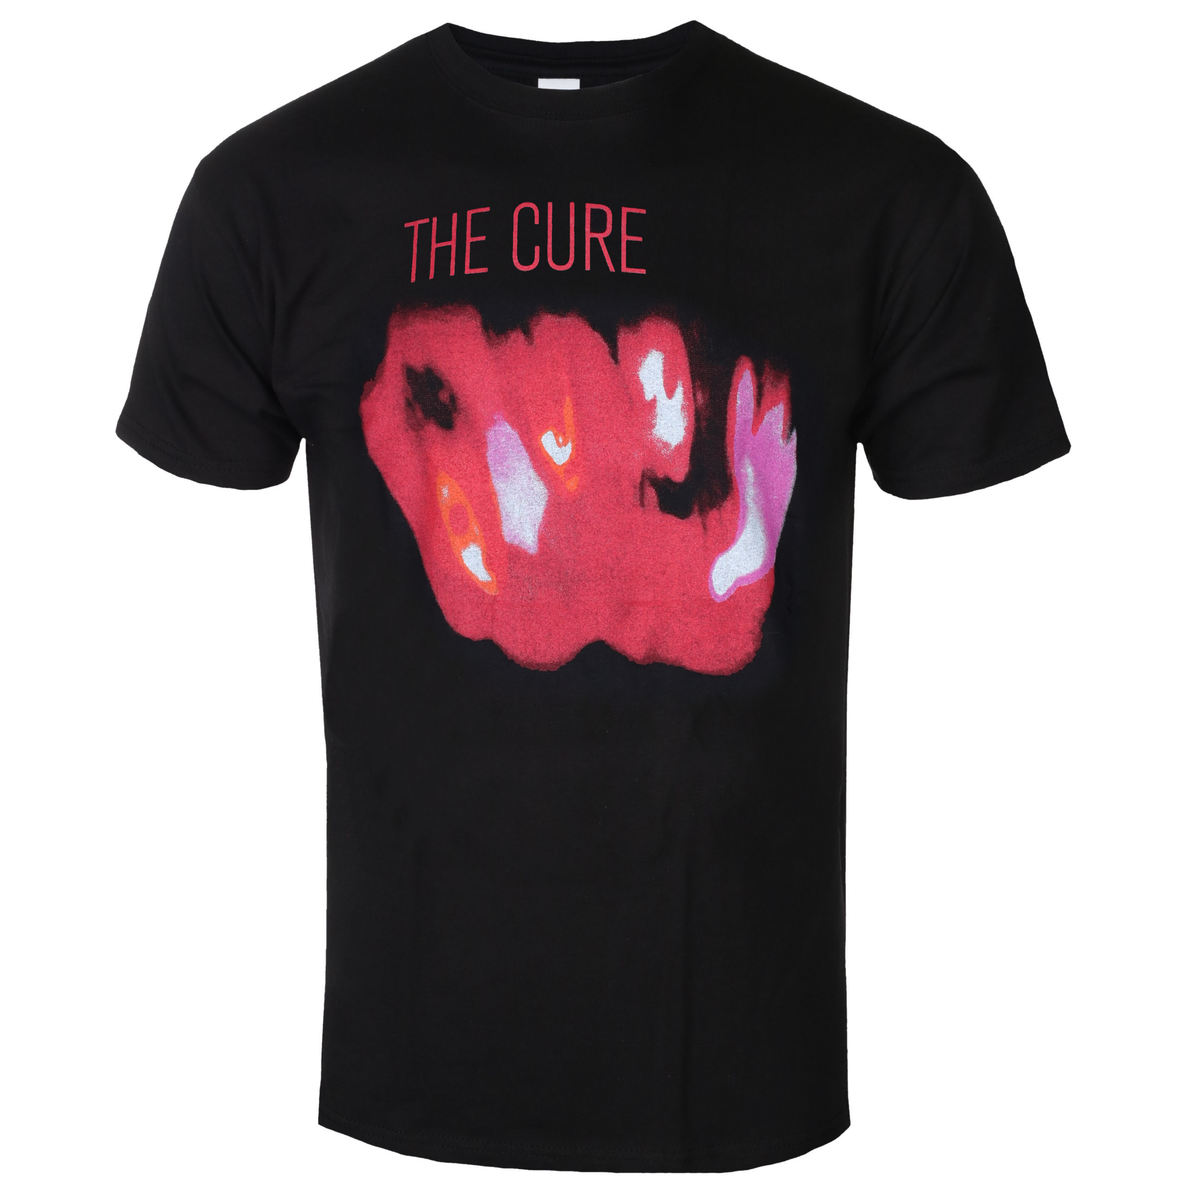 The Cure - Pornography (Medium)